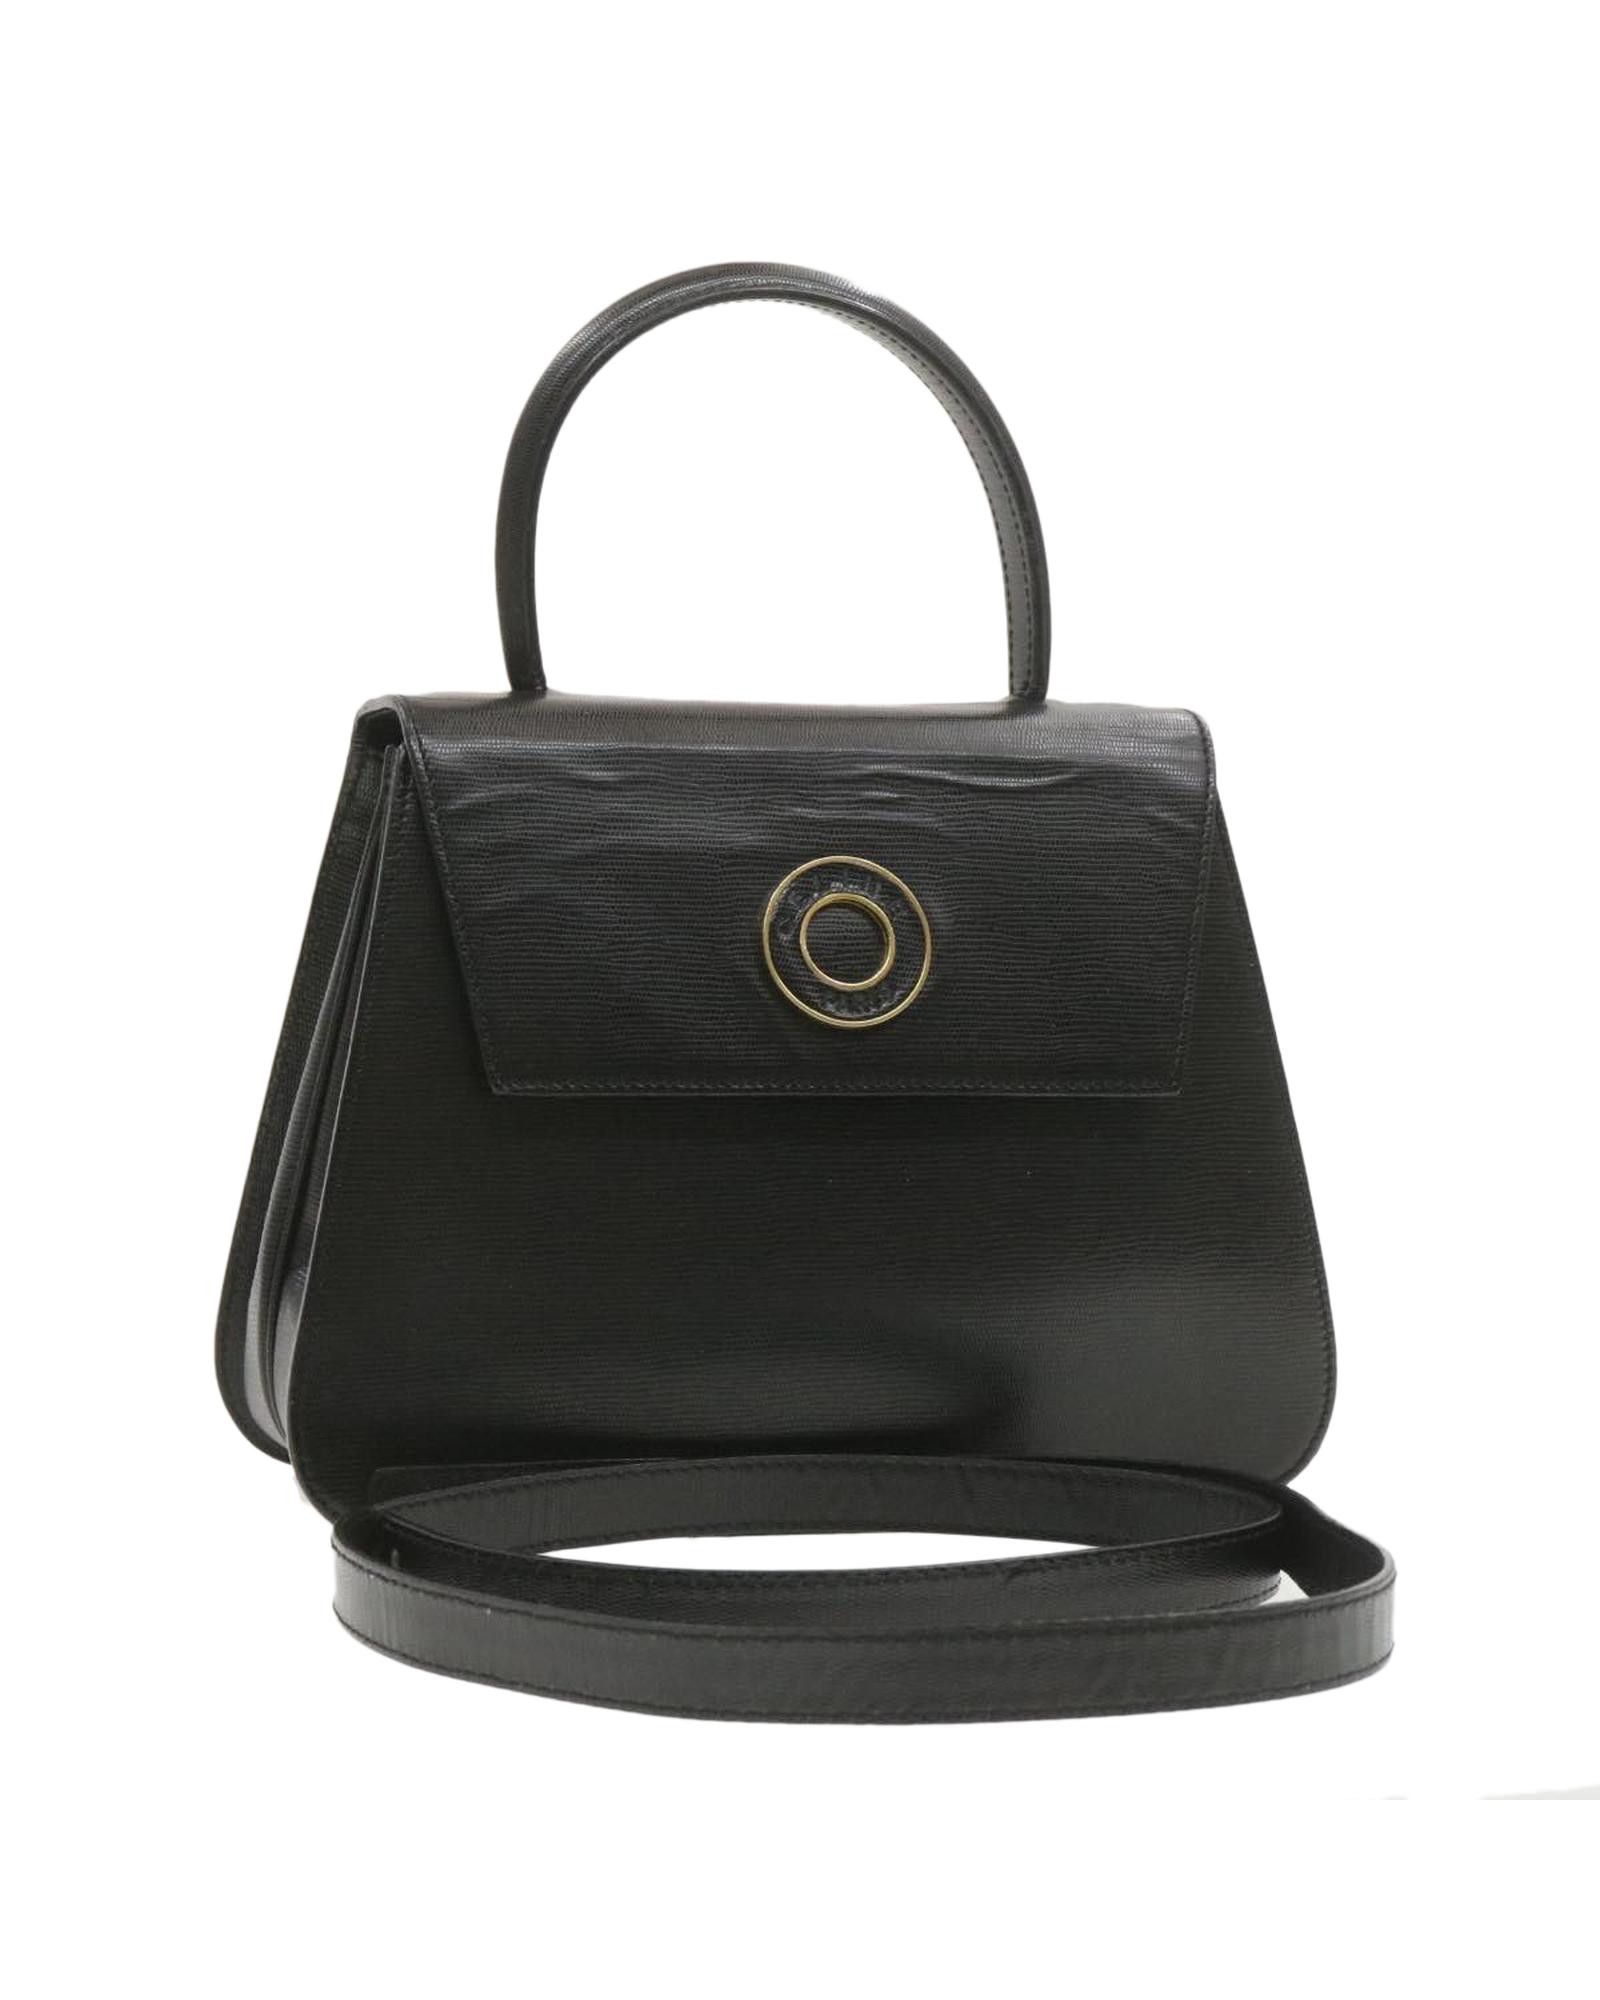 image of Celine Leather 2Way Hand Bag in Black, Women's